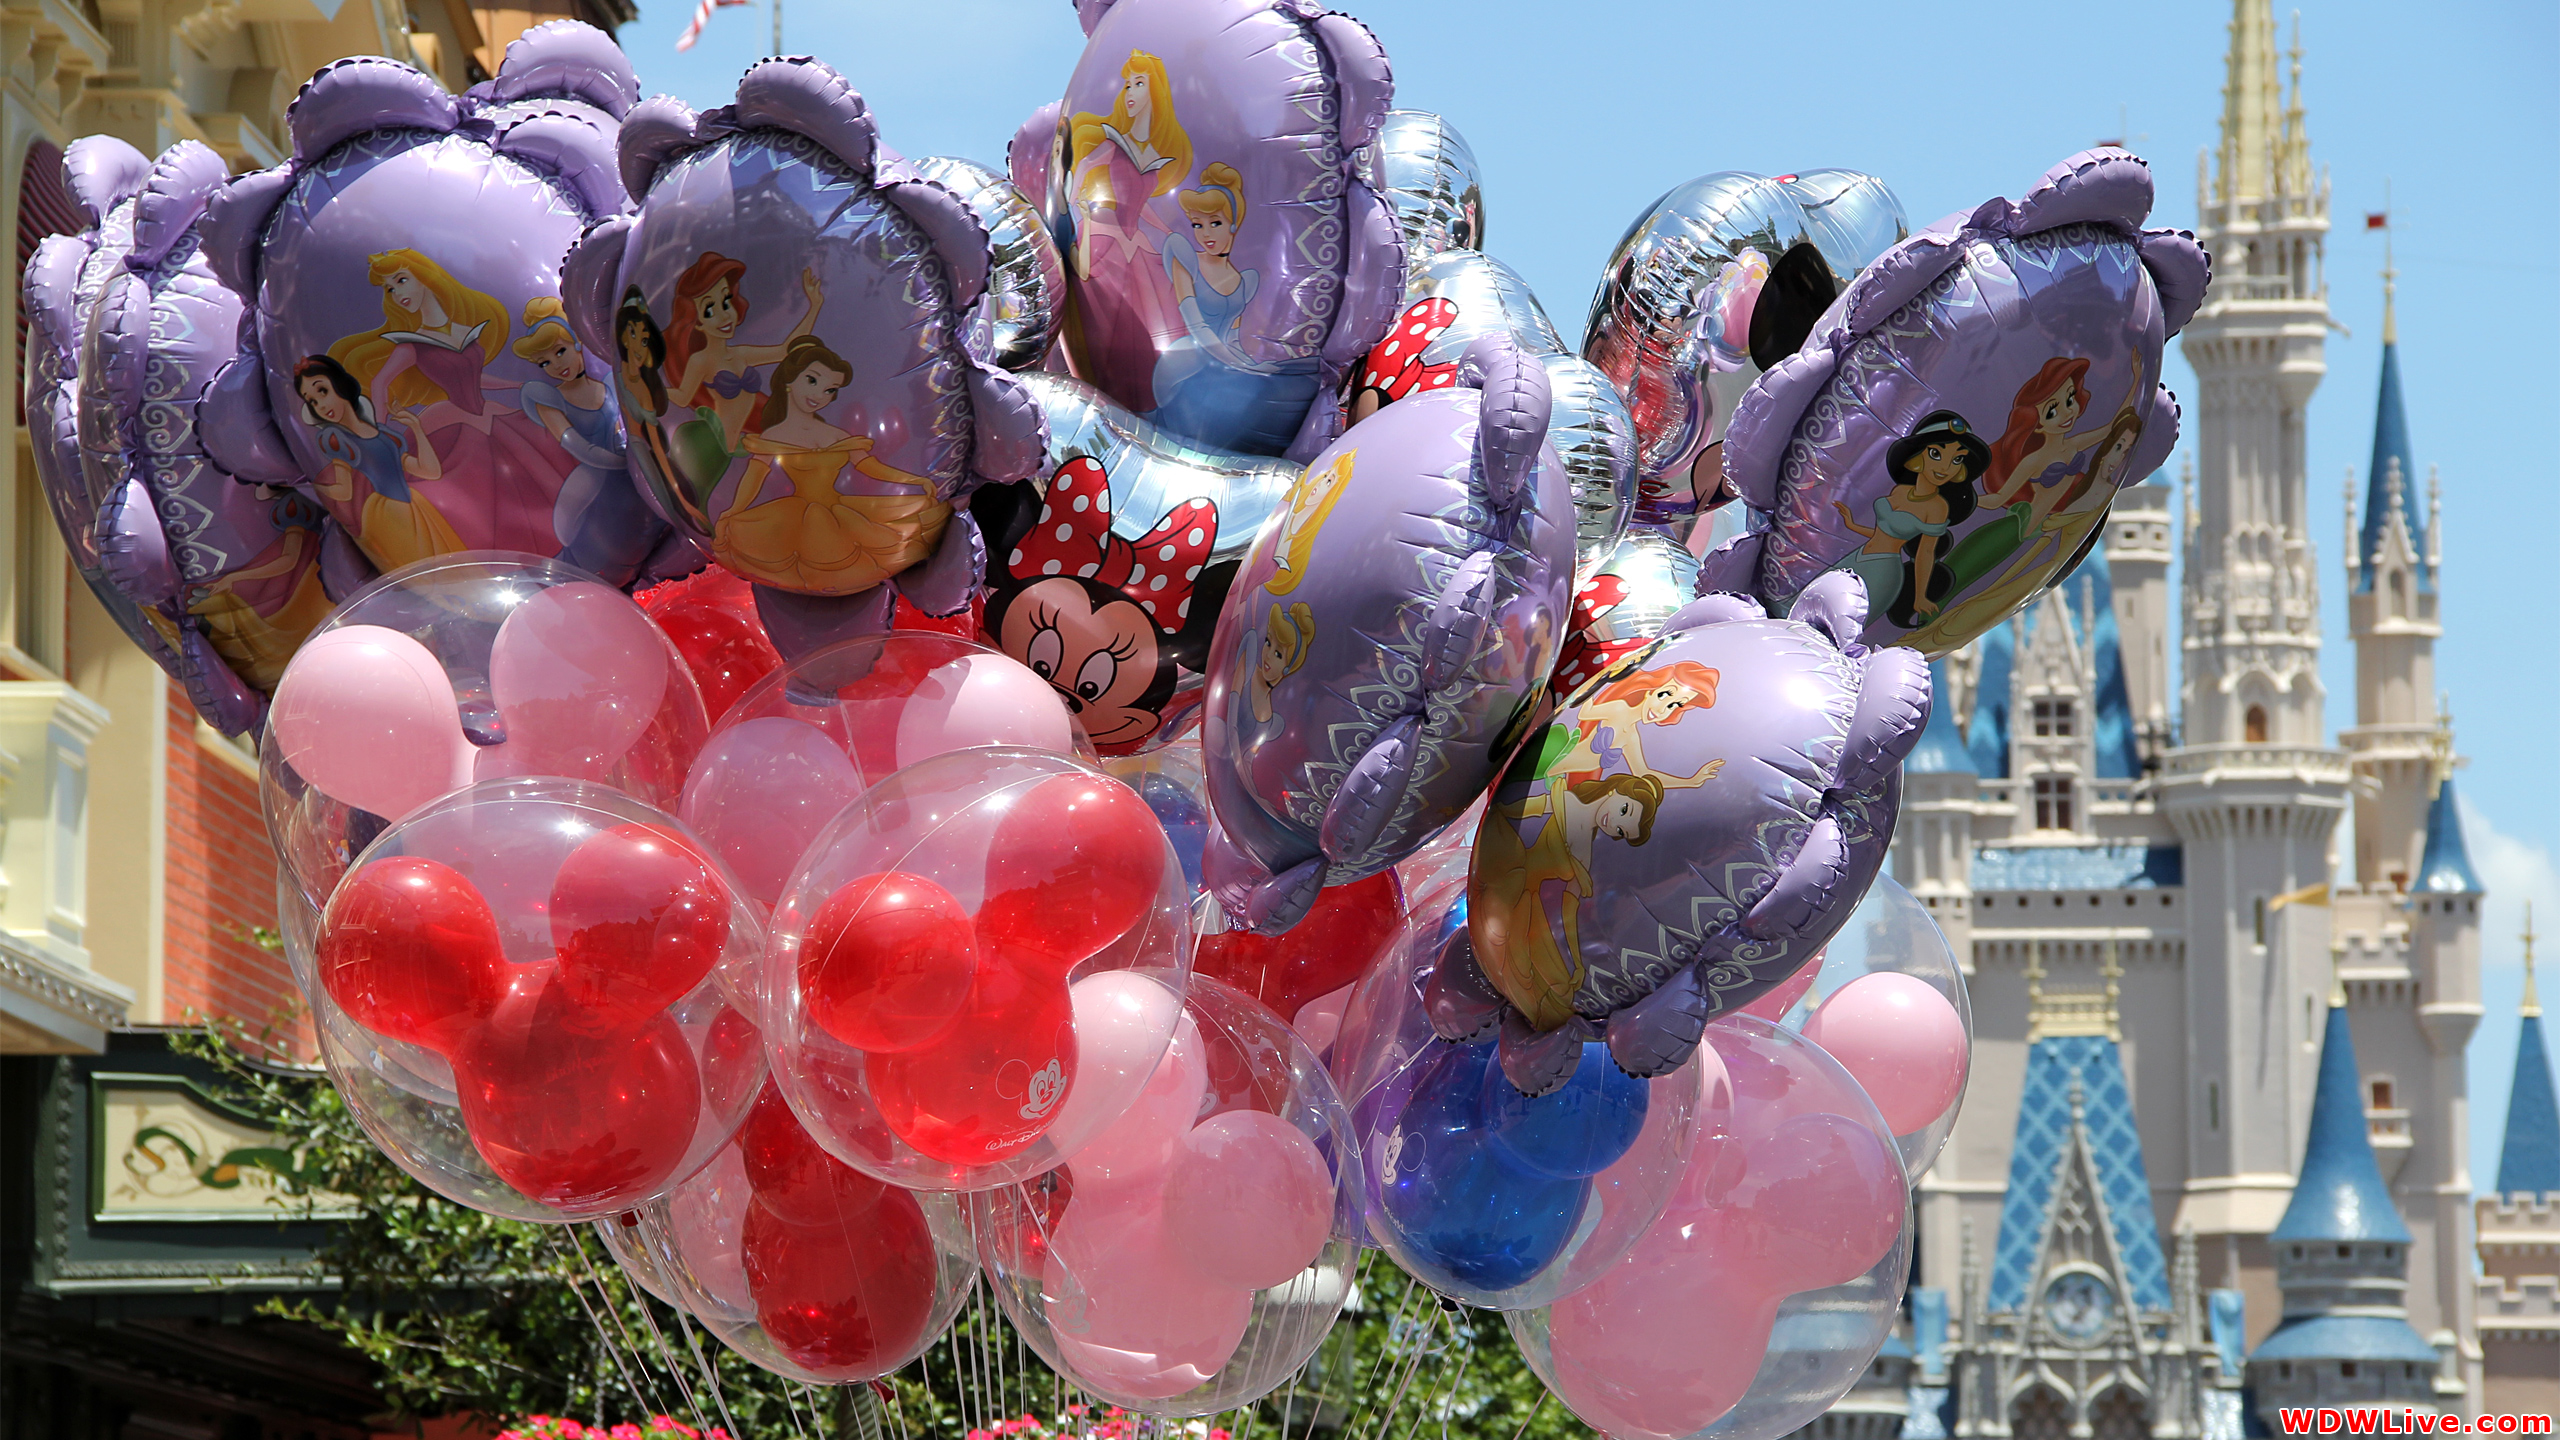 Cinderella Castle: Character balloons on Main Street U.S.A.